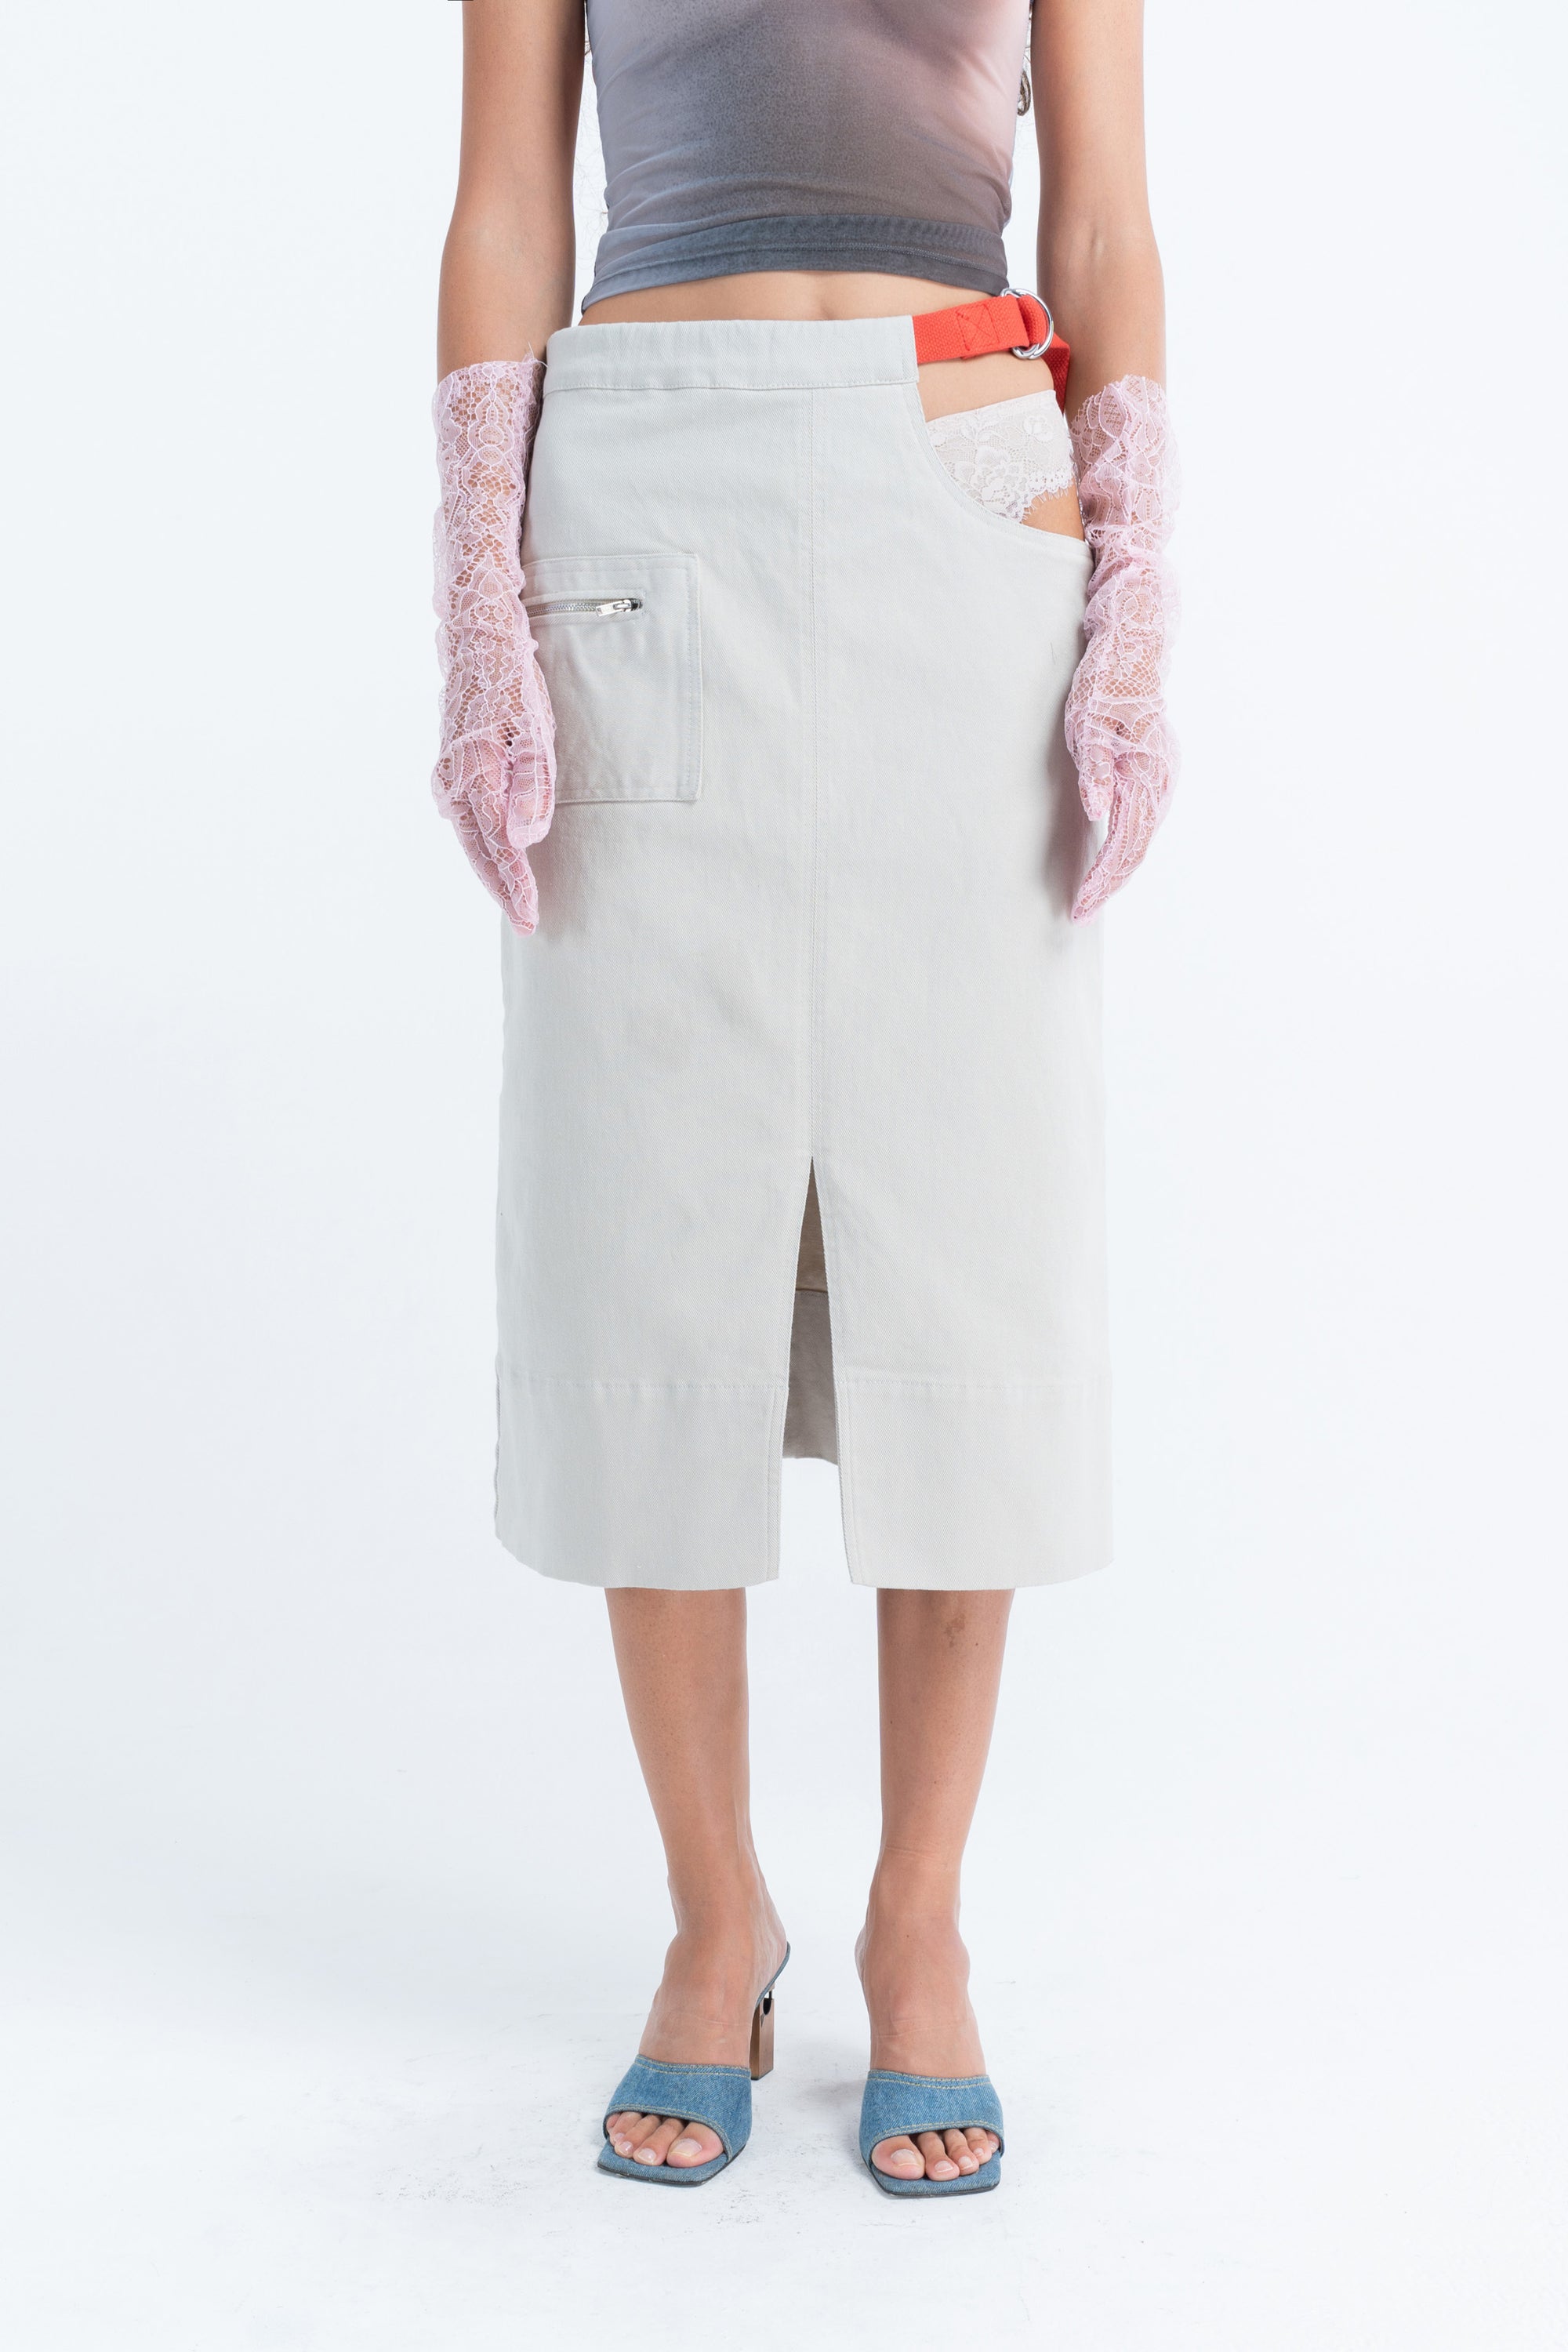 Arthur Apparel Cut-out Midi Off-White Skirt